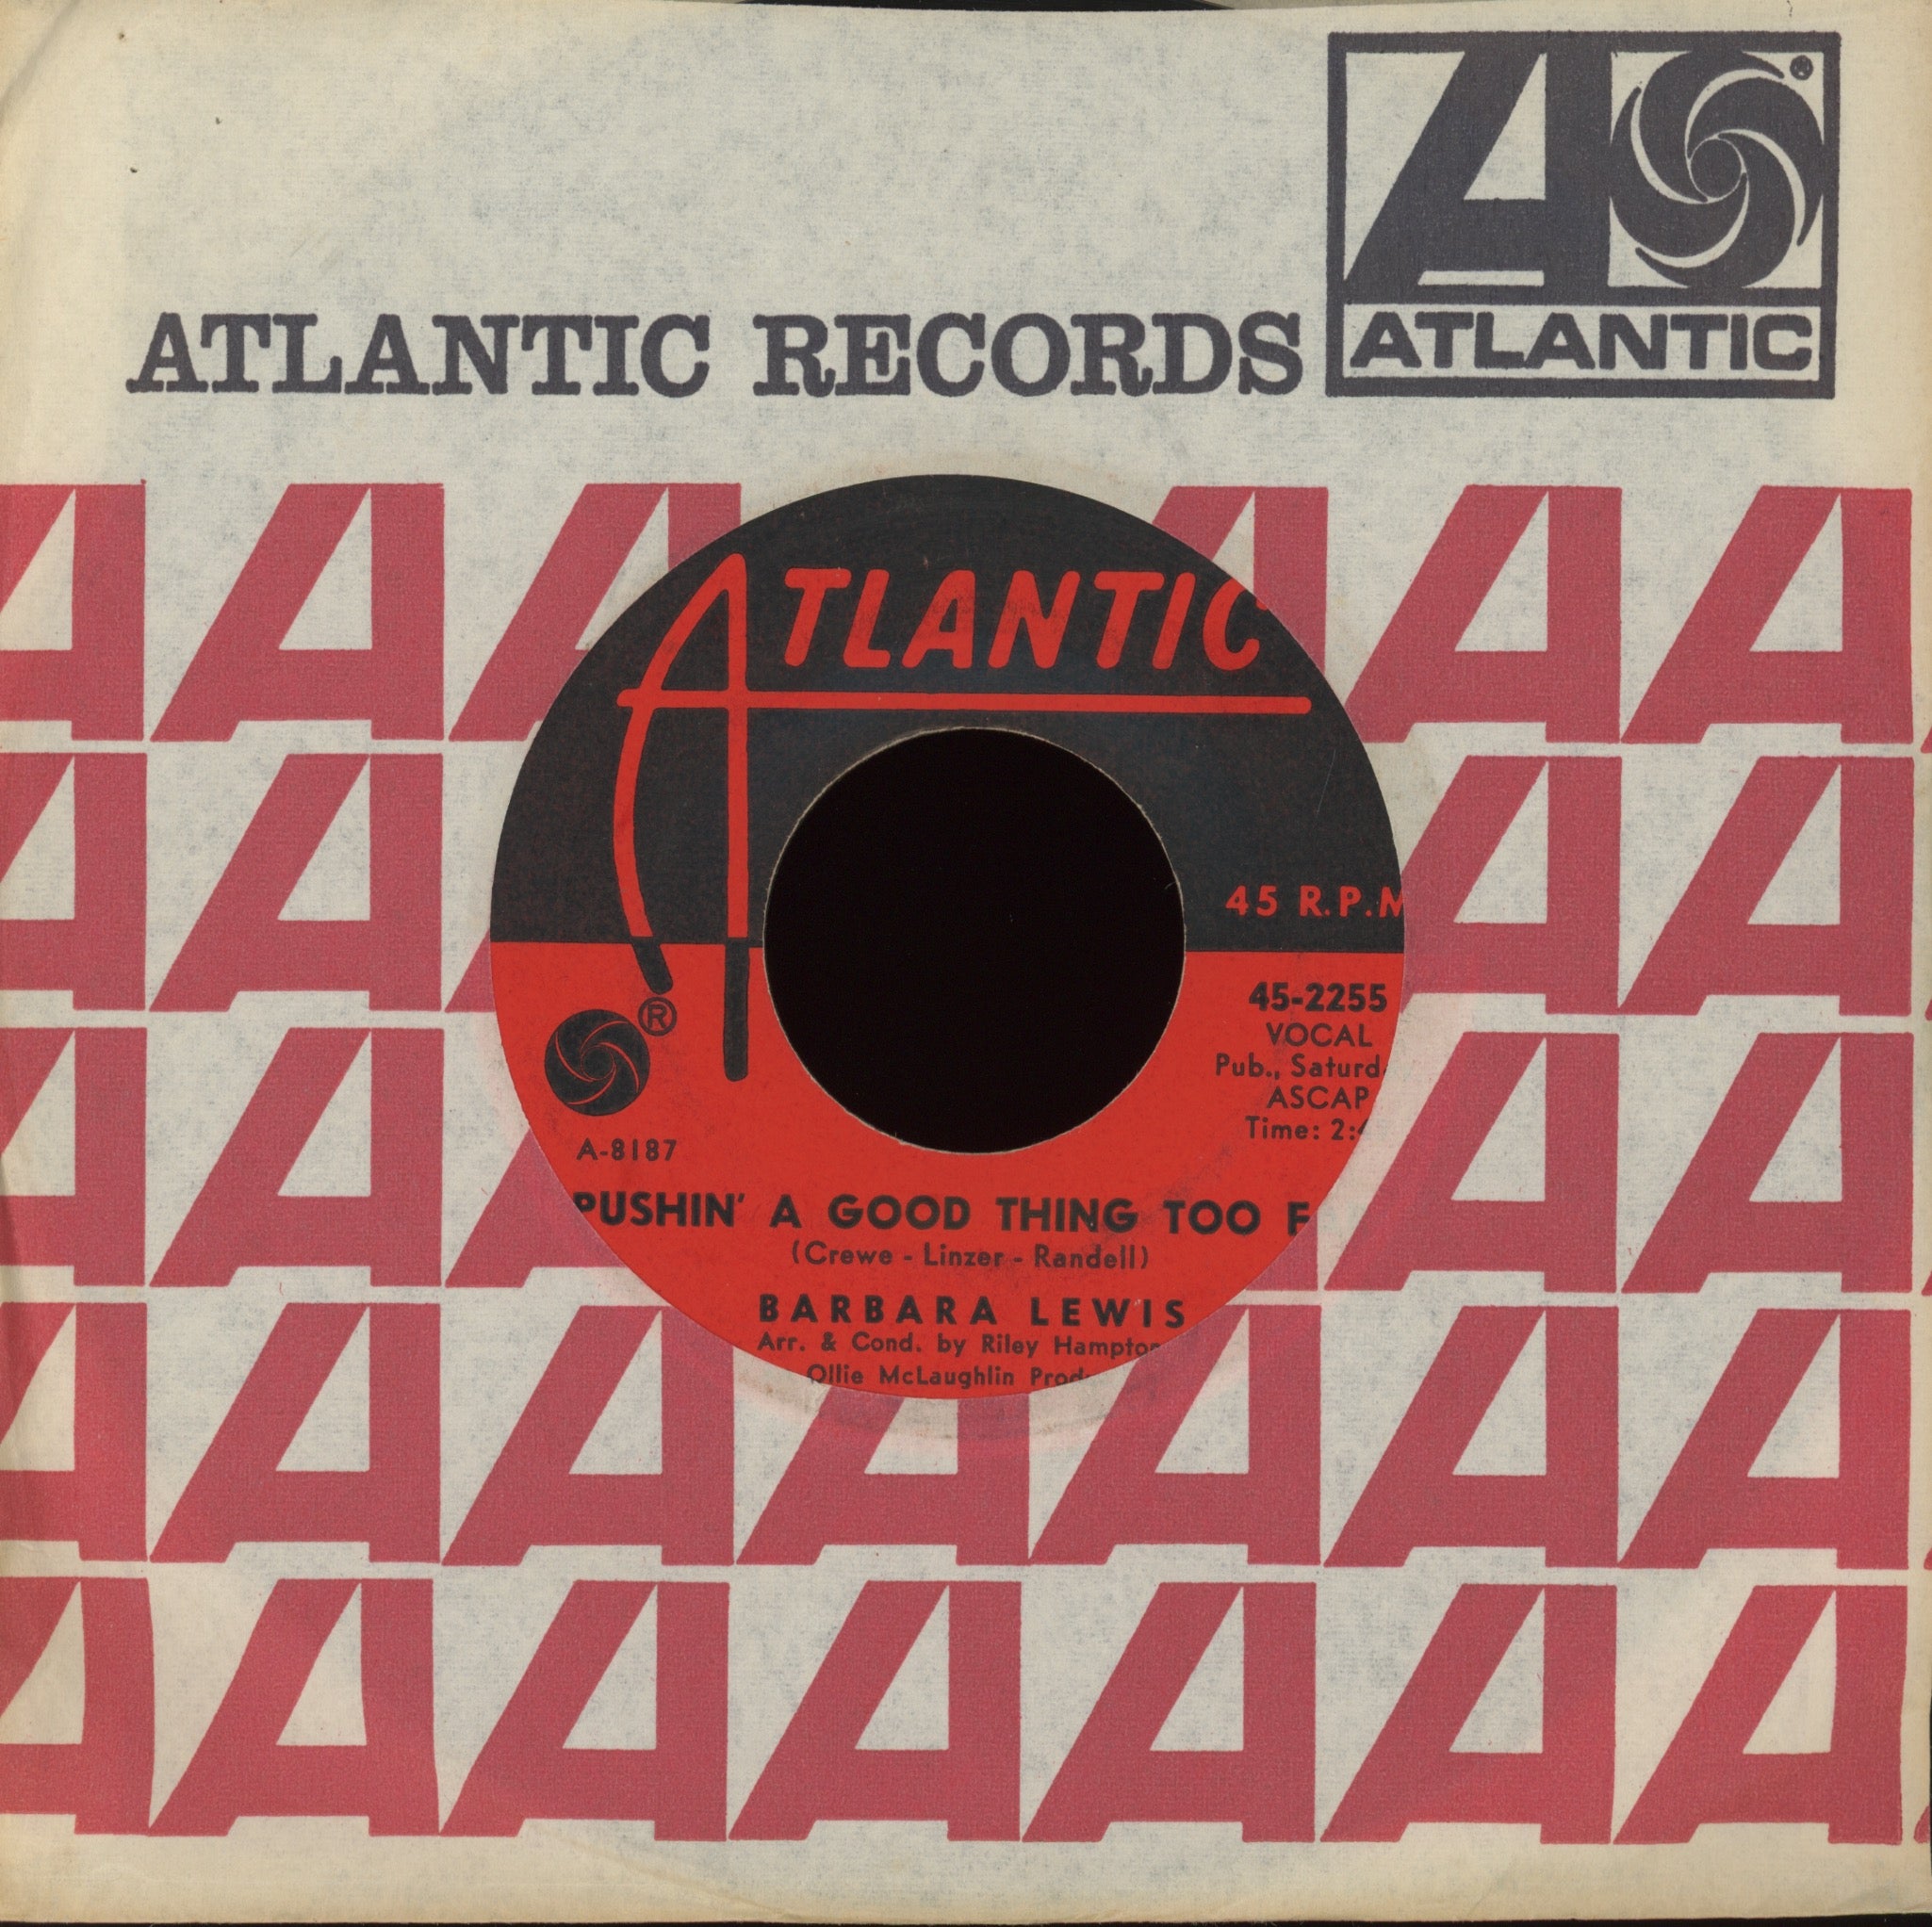 Barbara Lewis - Pushin' A Good Thing Too Far on Atlantic Northern Soul 45